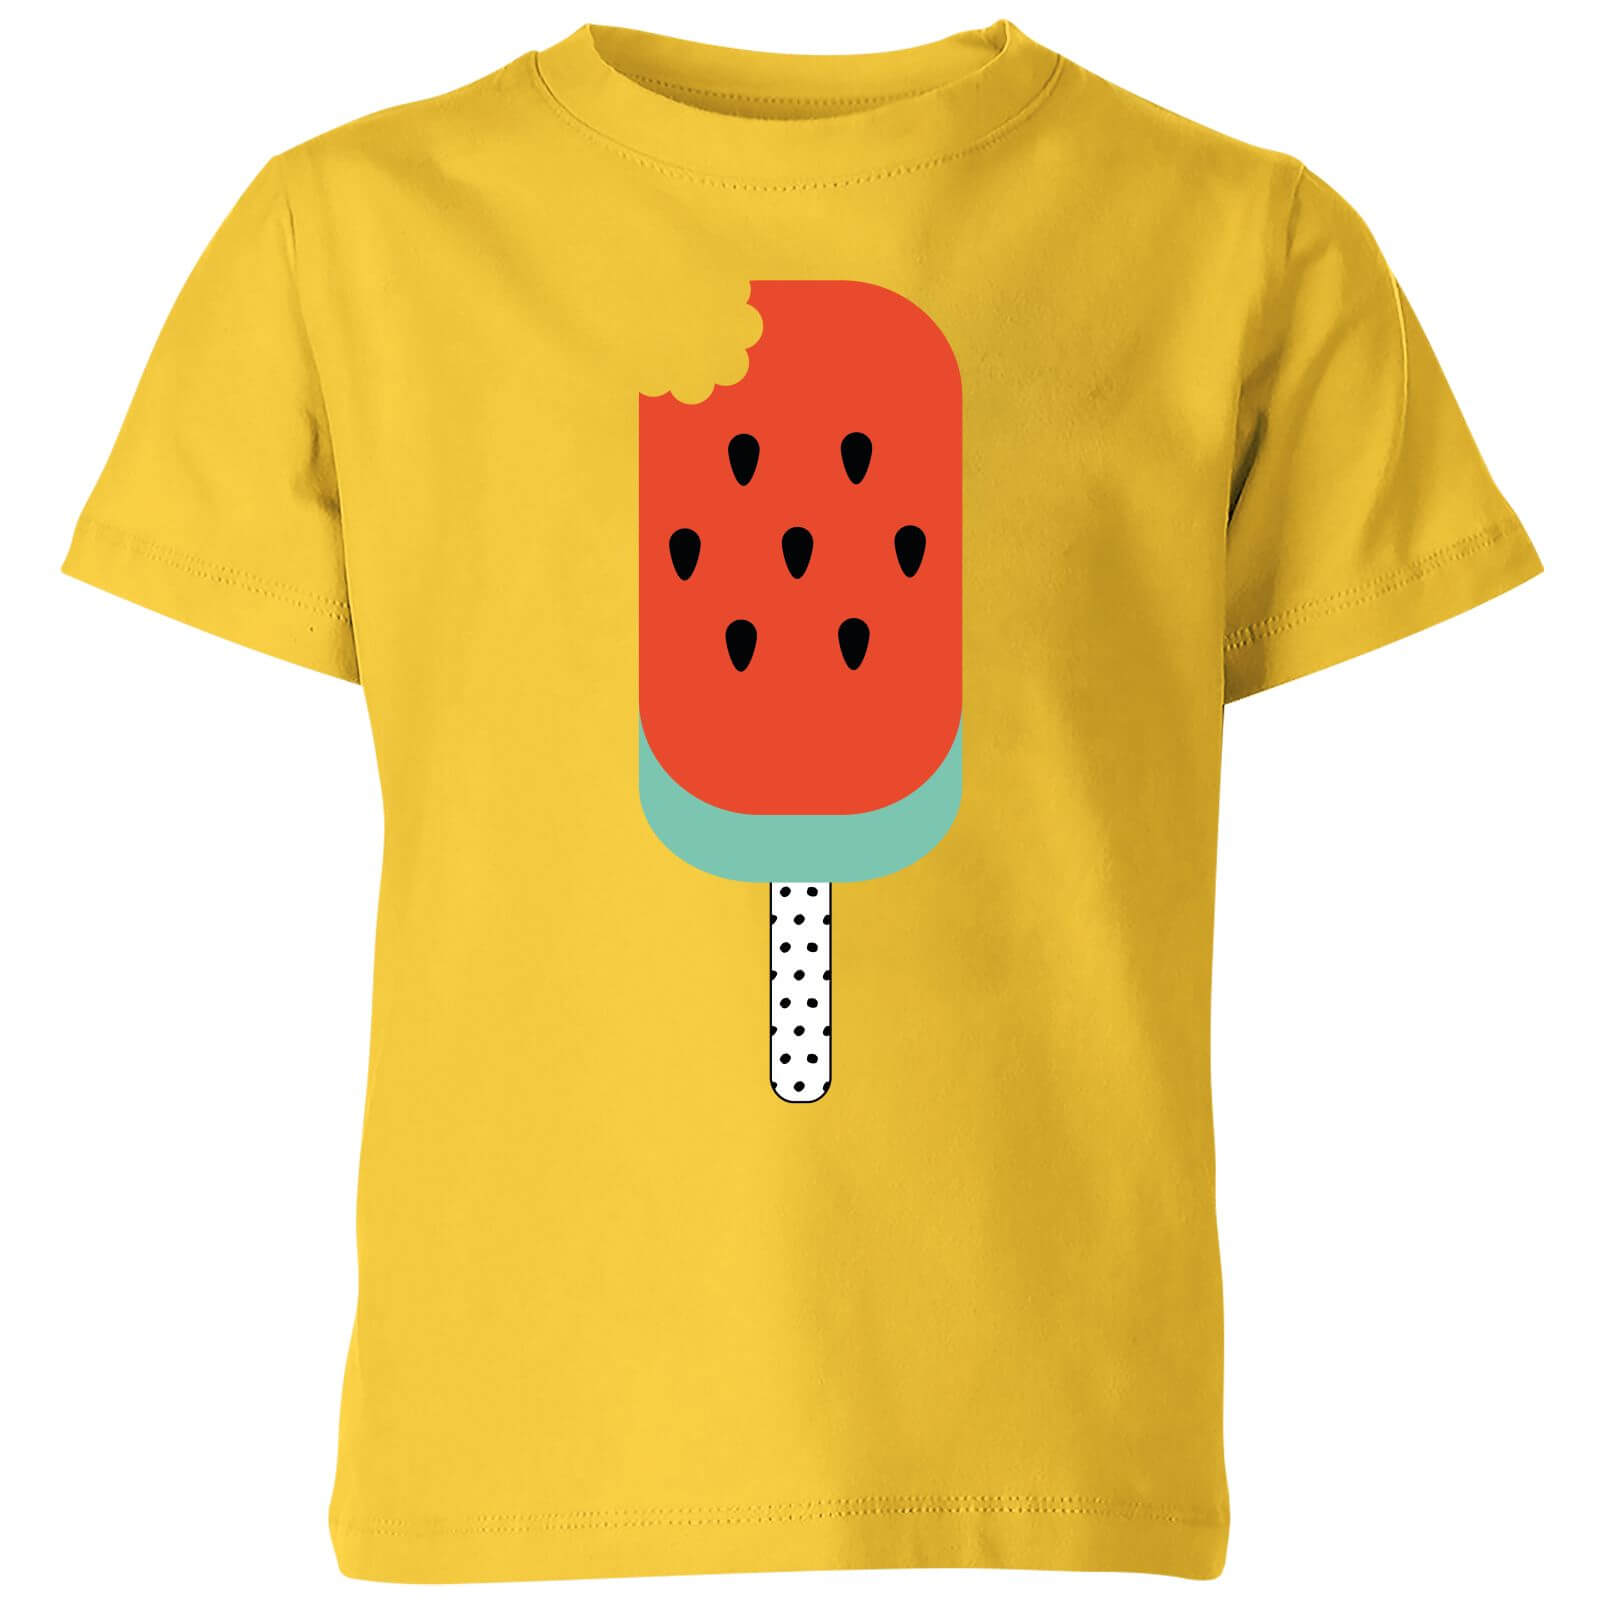 My Little Rascal Watermelon Lolly Kids' T-Shirt - Yellow - 3-4 Years - Yellow